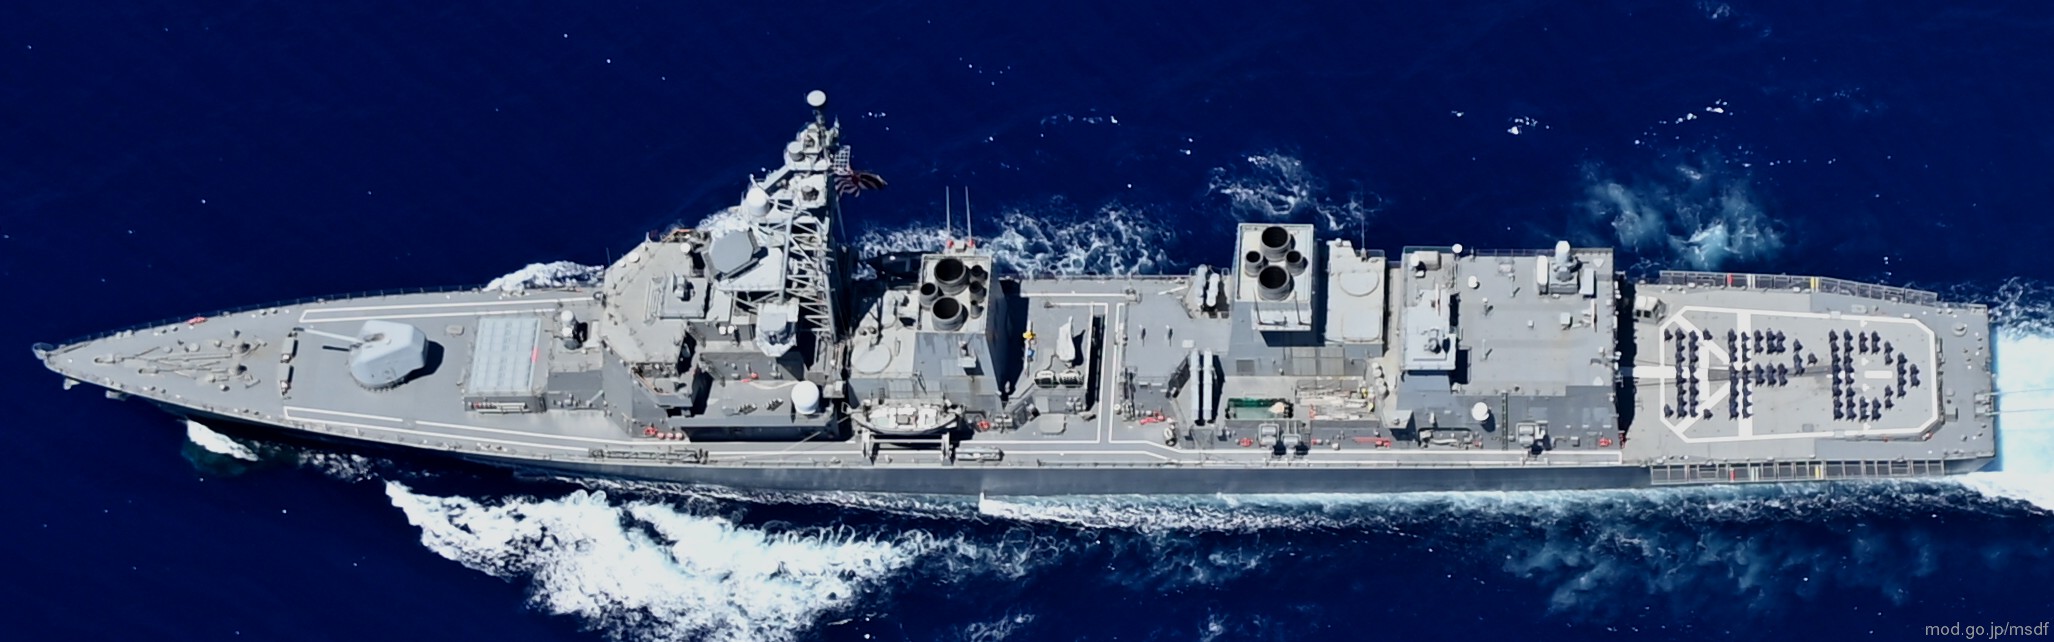 dd-110 js takanami class destroyer japan maritime self defense force jmsdf 29